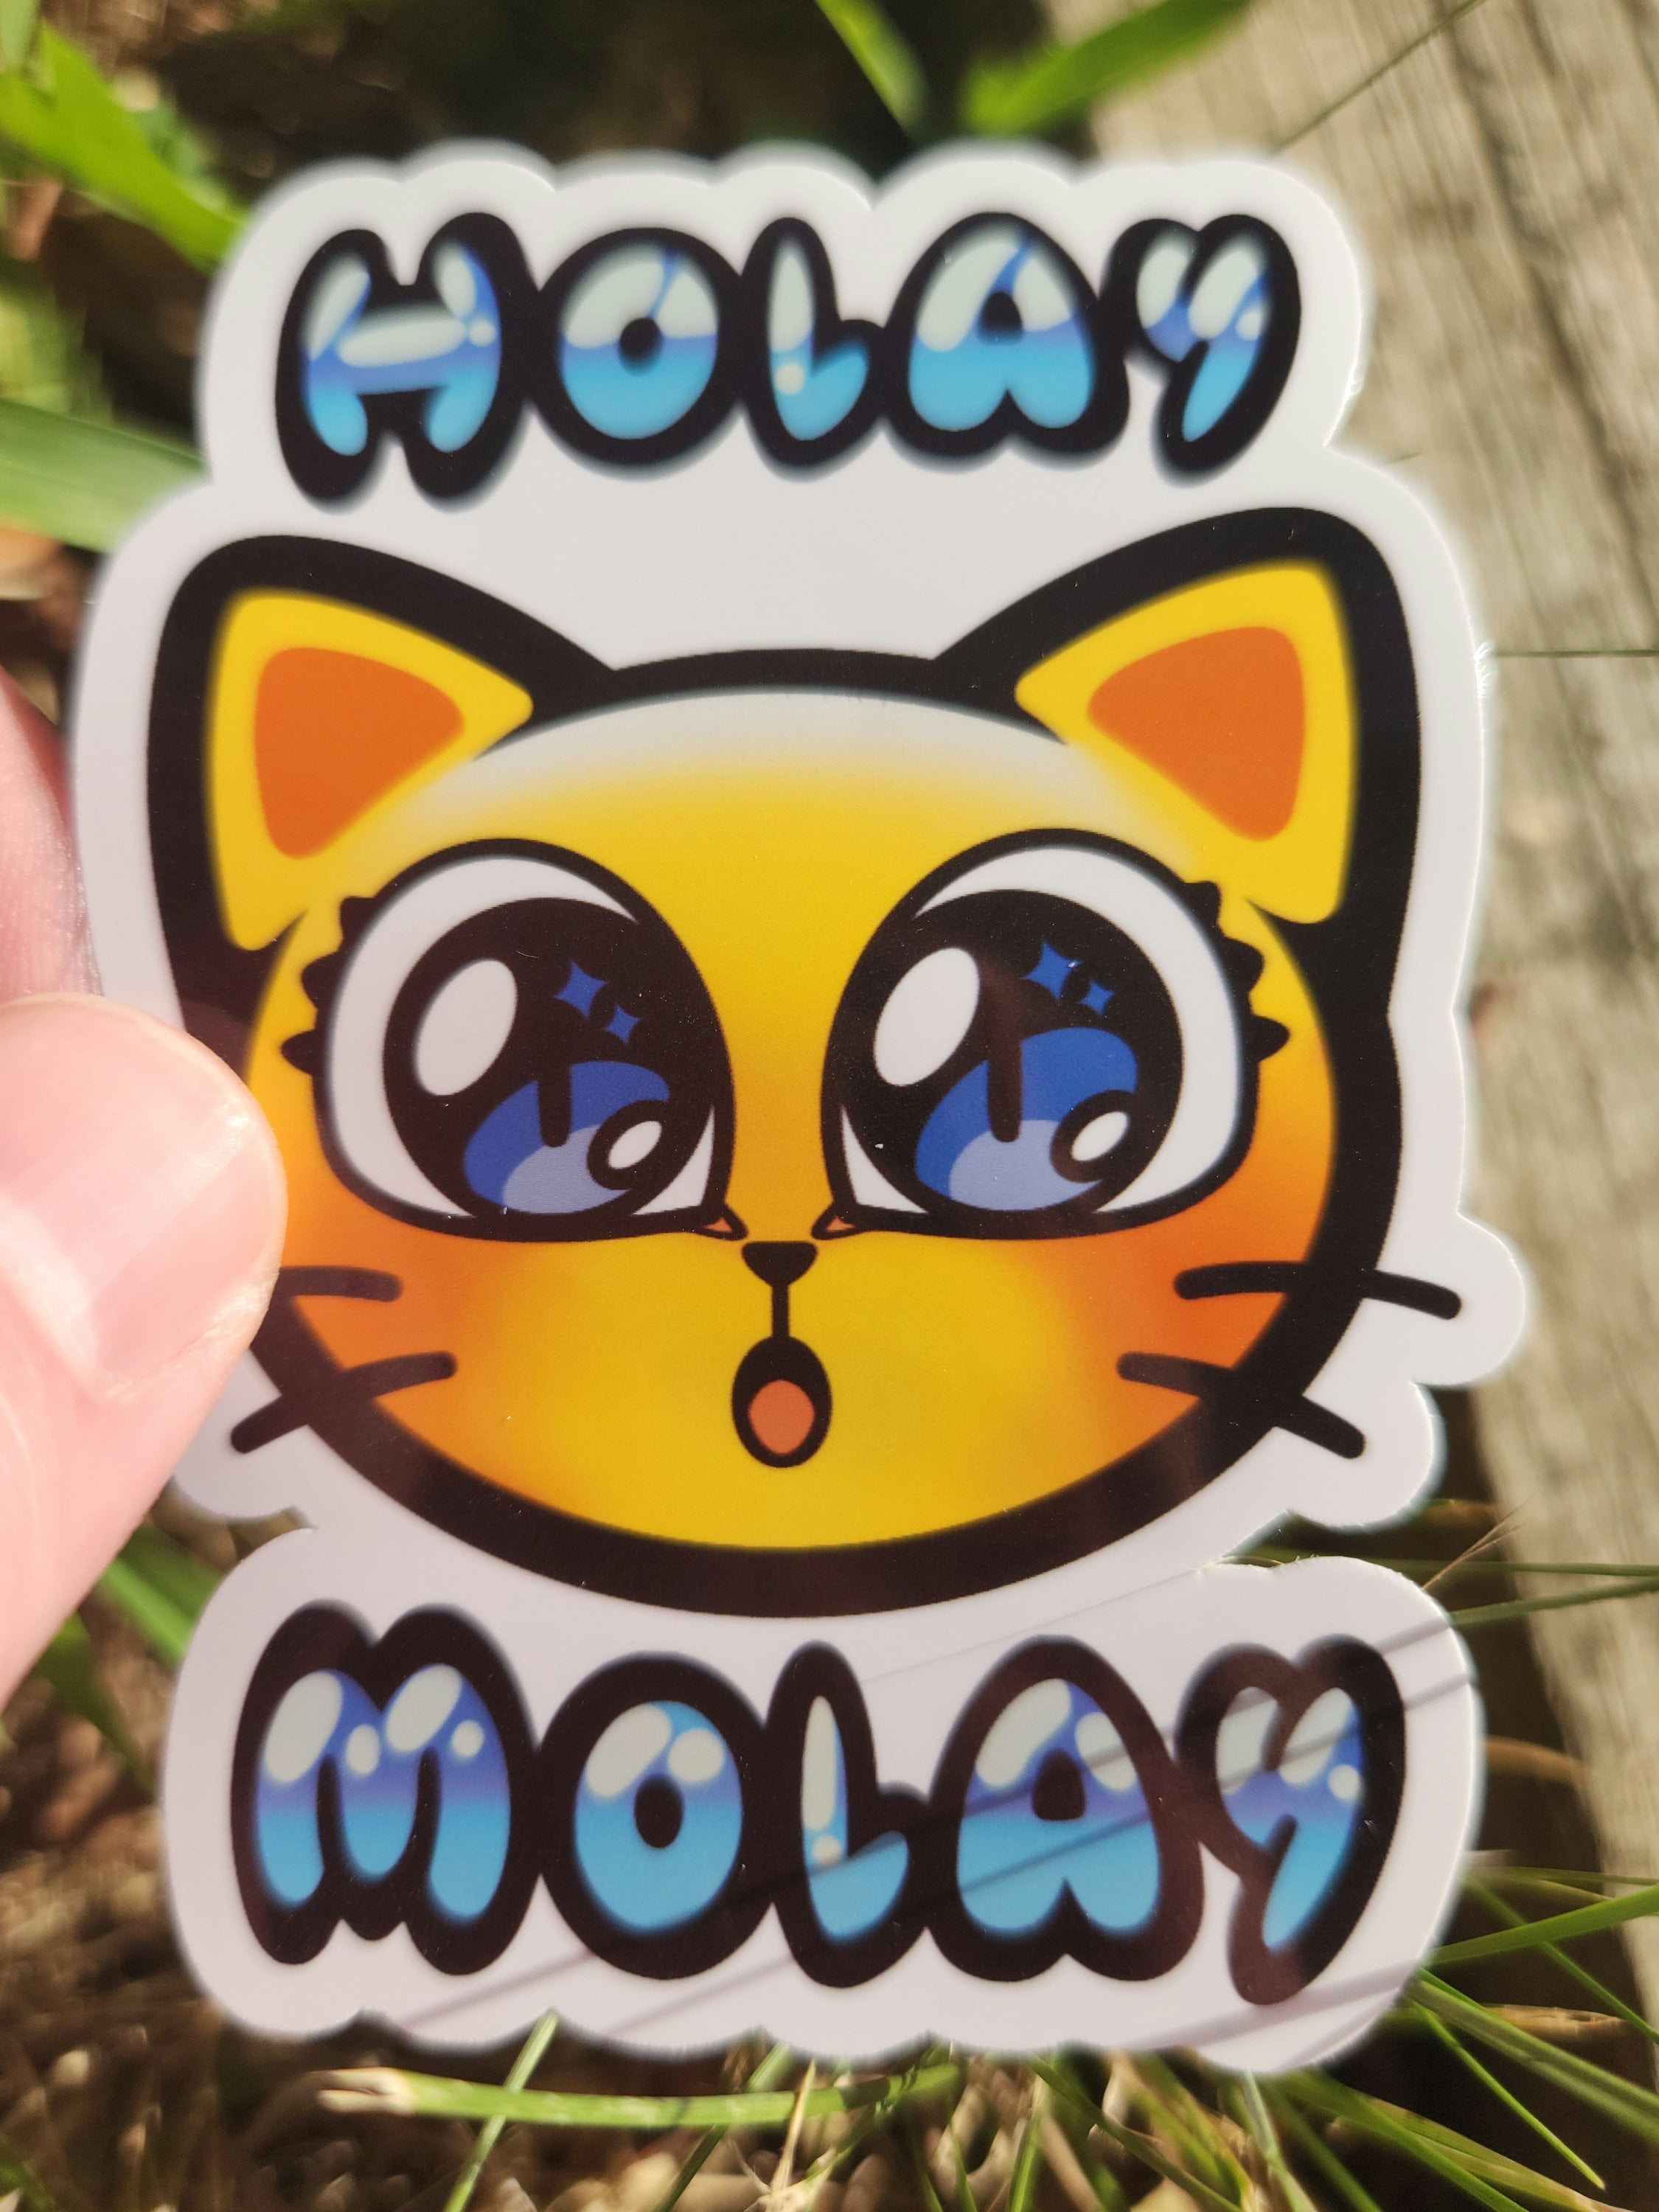 holay molay holy moly emoji | Lightweight Sweatshirt